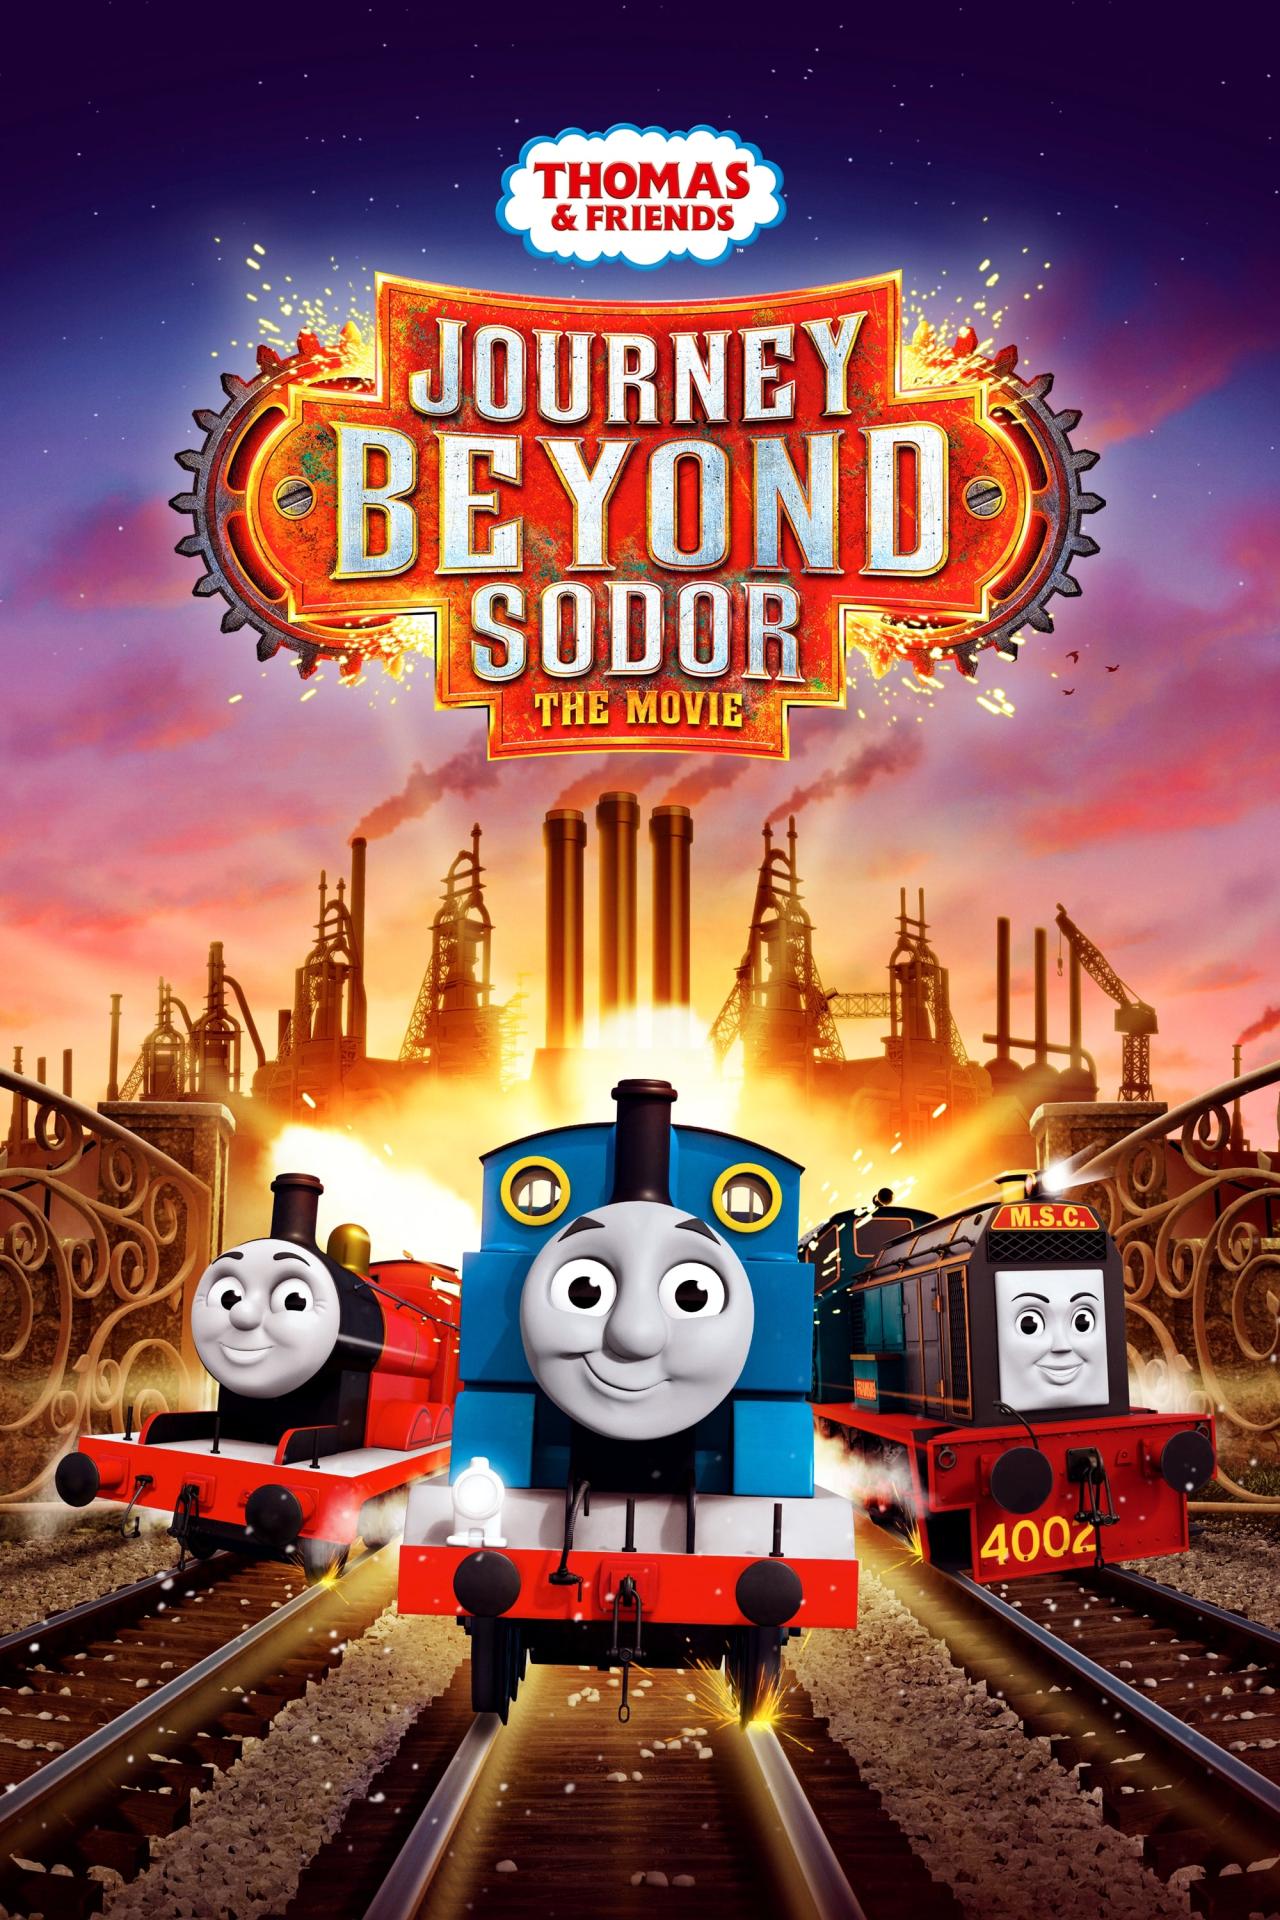 Affiche du film Thomas & Friends: Journey Beyond Sodor - The Movie